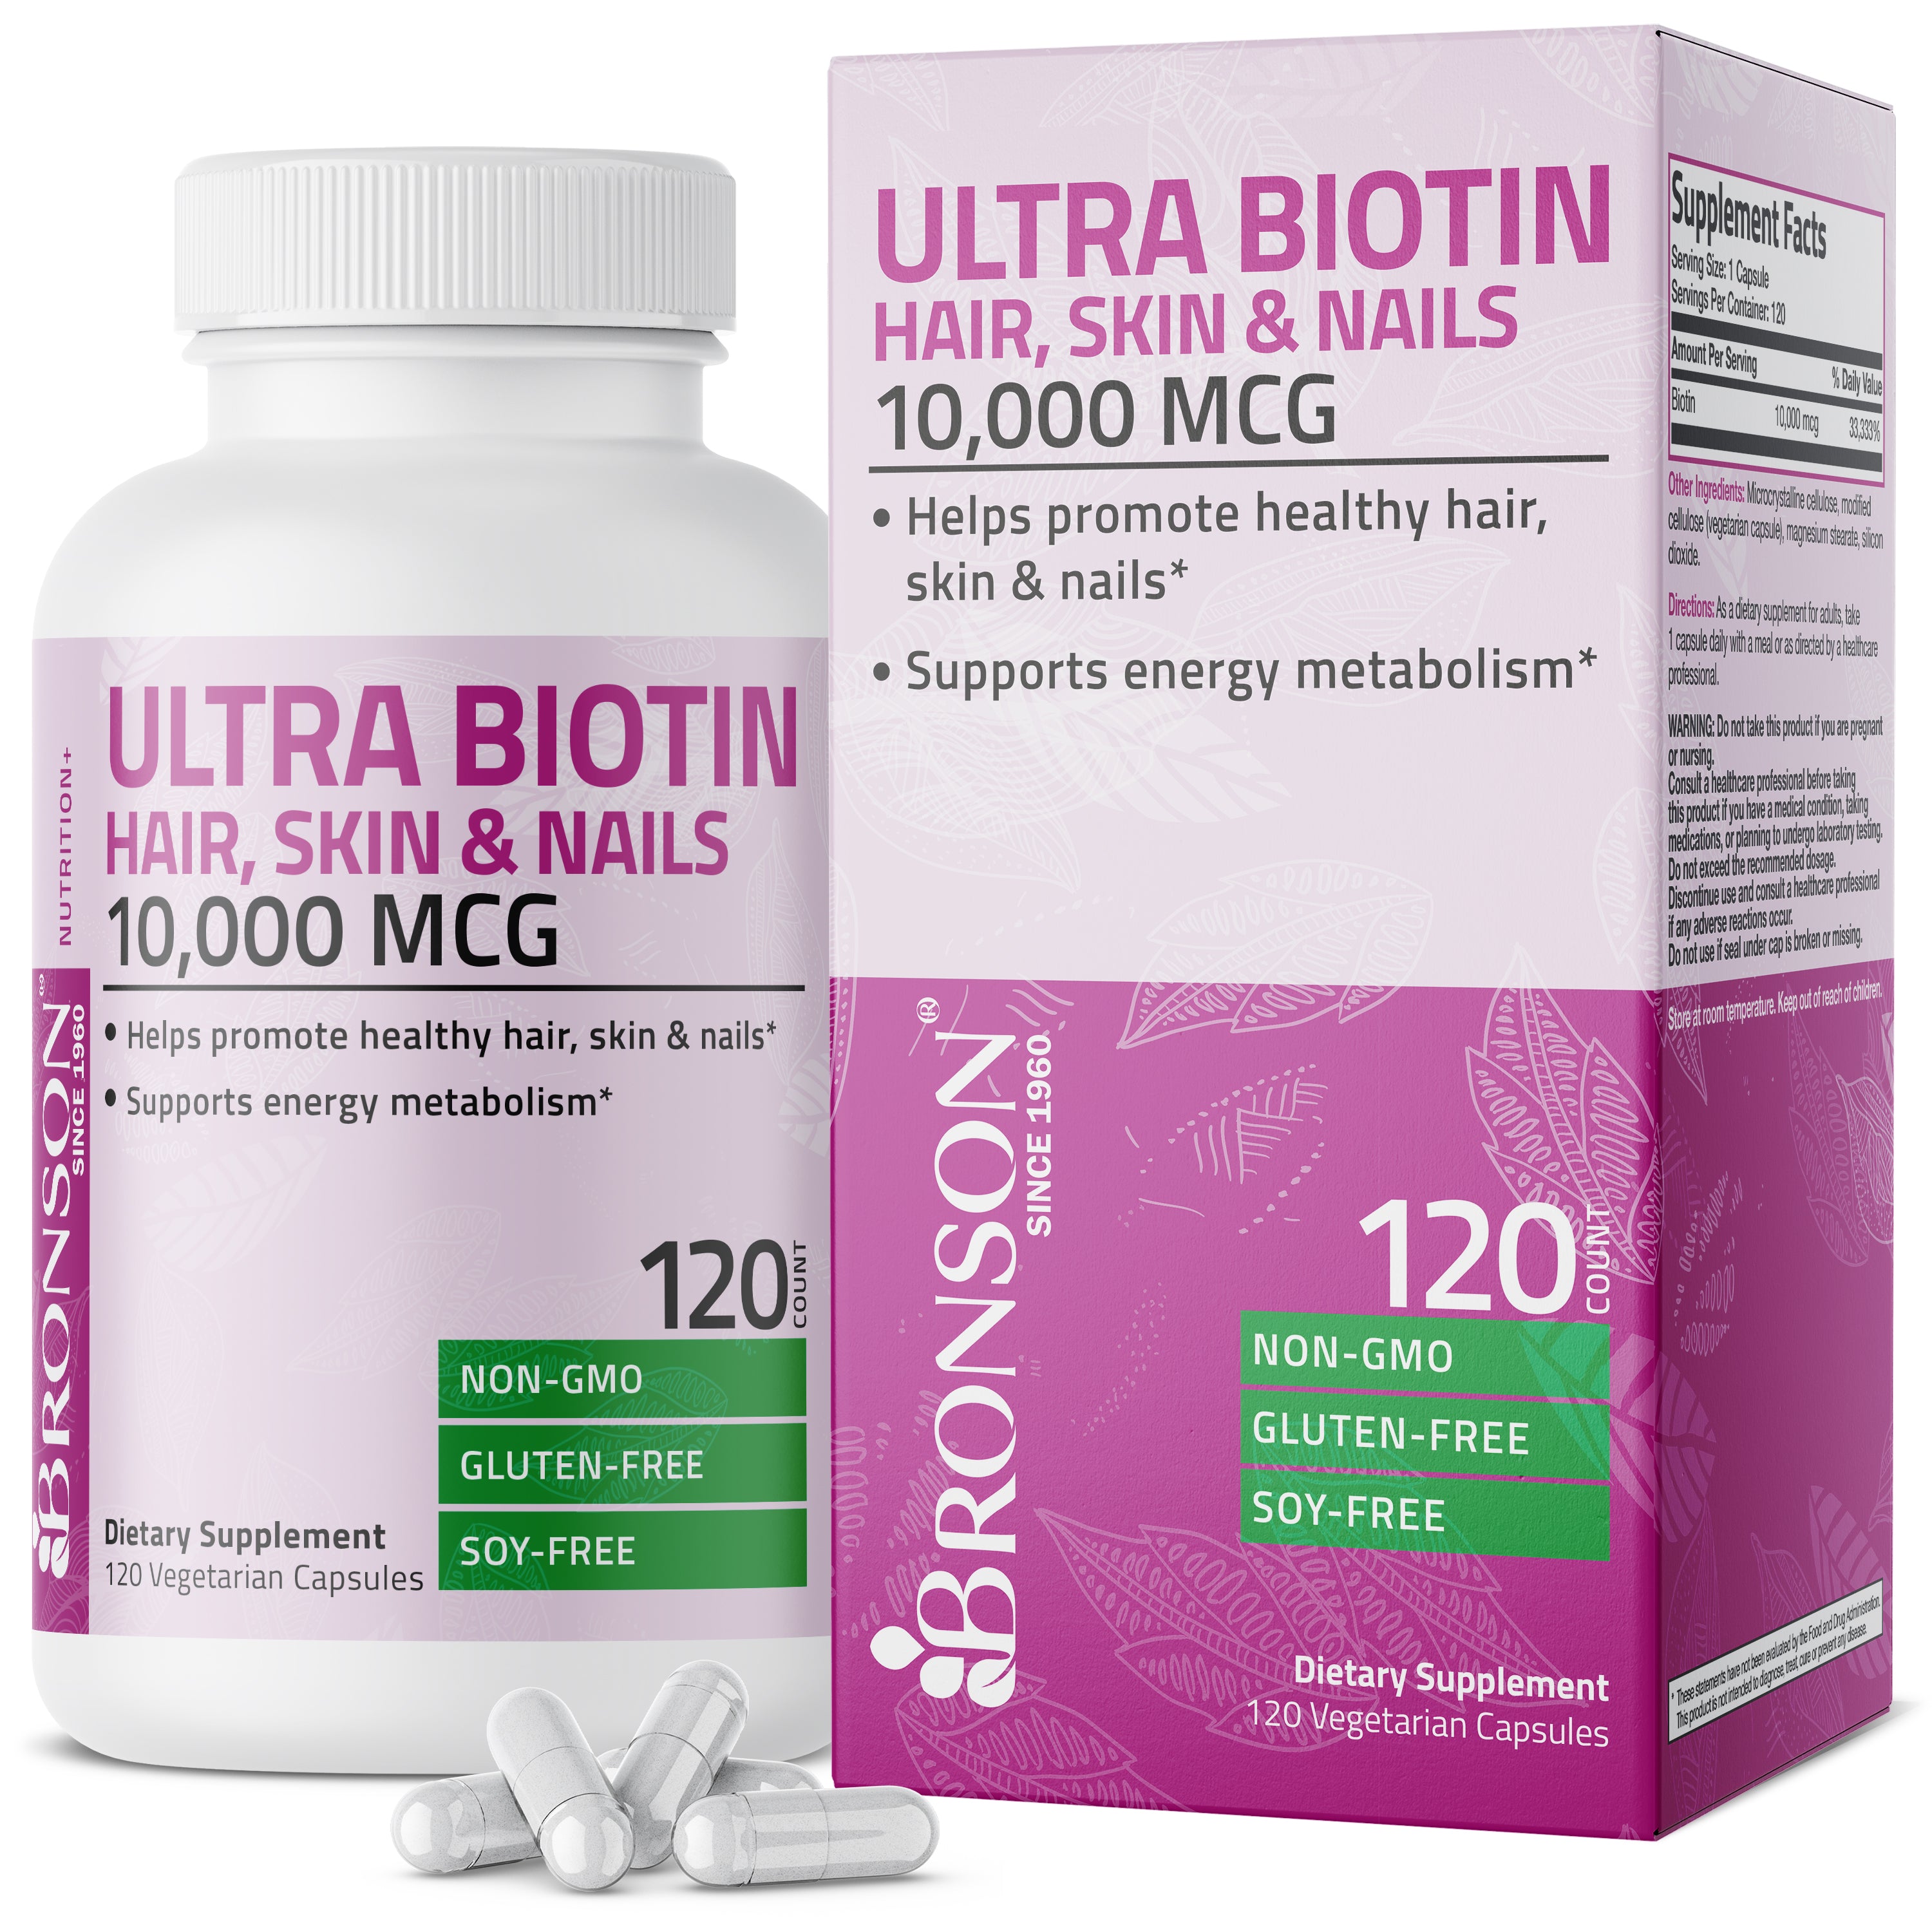 Ultra Biotin Hair, Skin & Nails - 10,000 mcg view 1 of 14